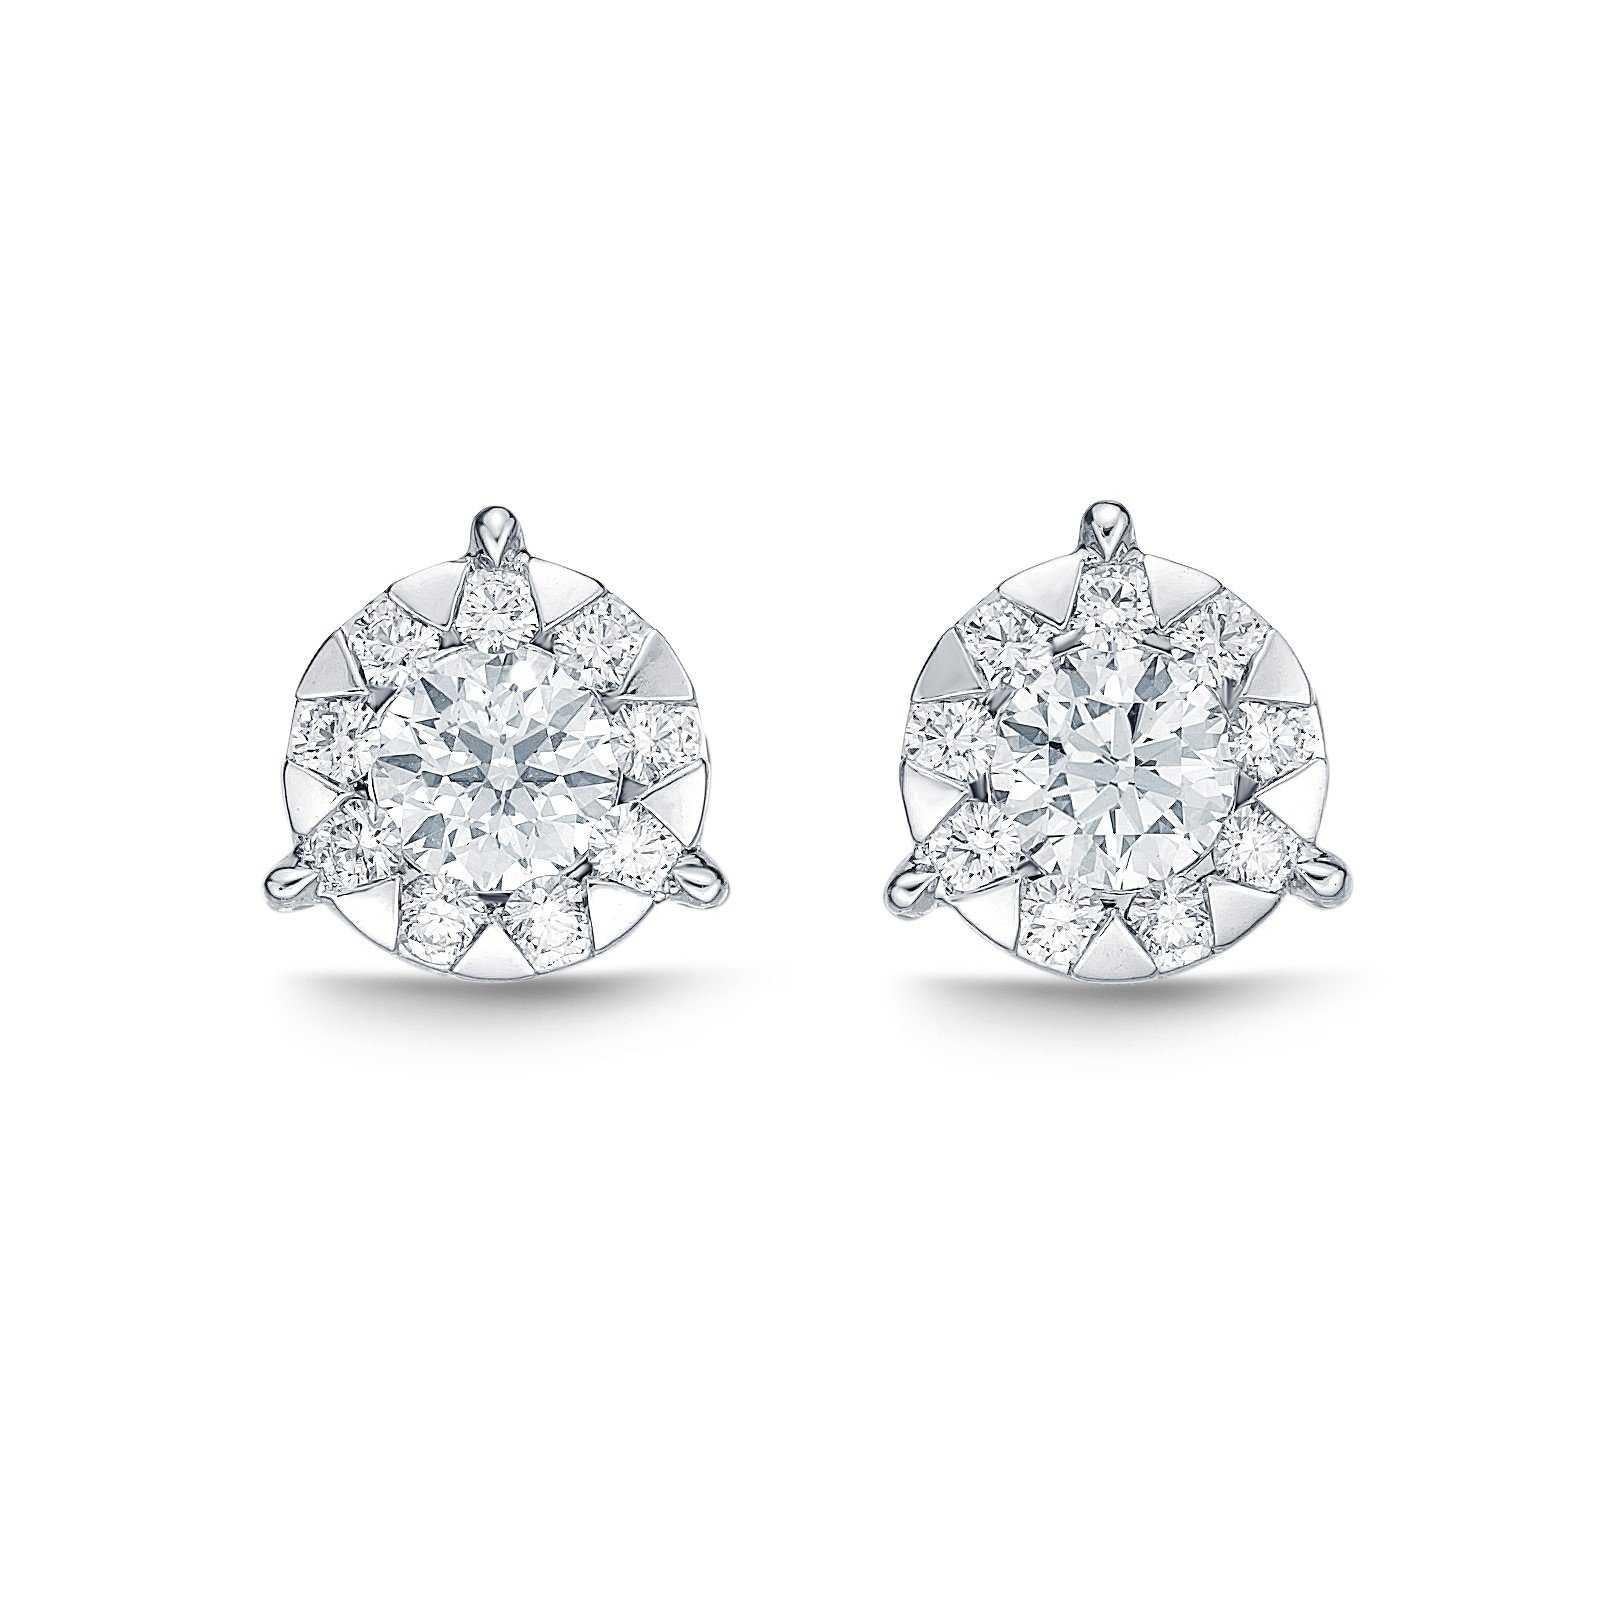 Memoire Bouquet Collection Diamond Stud Earrings 1.33ctw Wid 6 Carat TW 